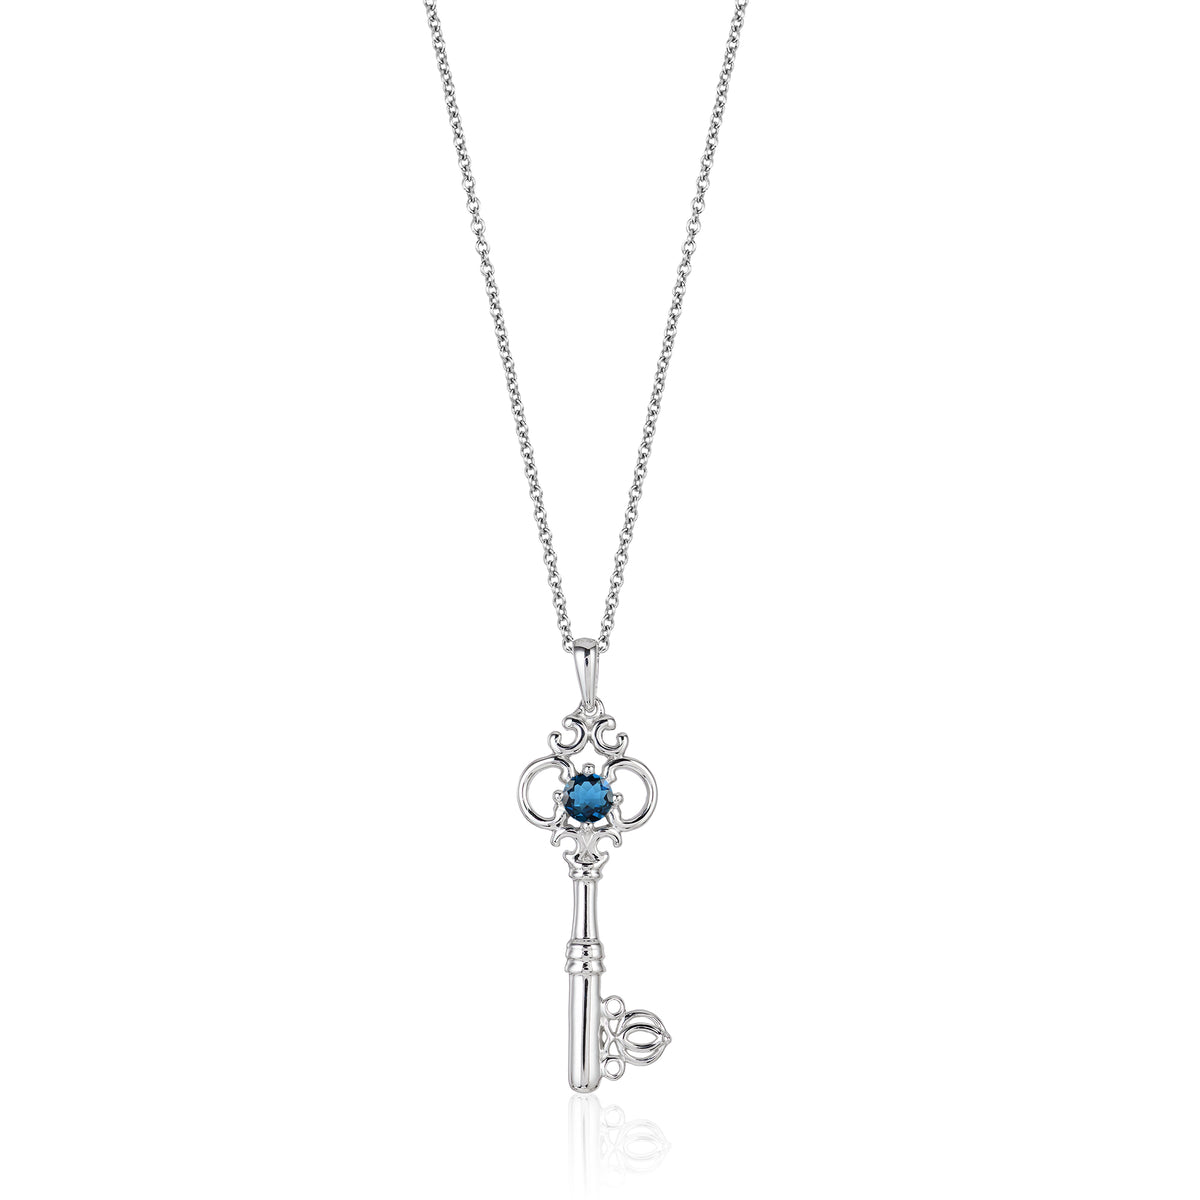 Disney Cinderella Inspired Diamond Earrings with London Blue Topaz | Enchanted Disney Fine Jewelry